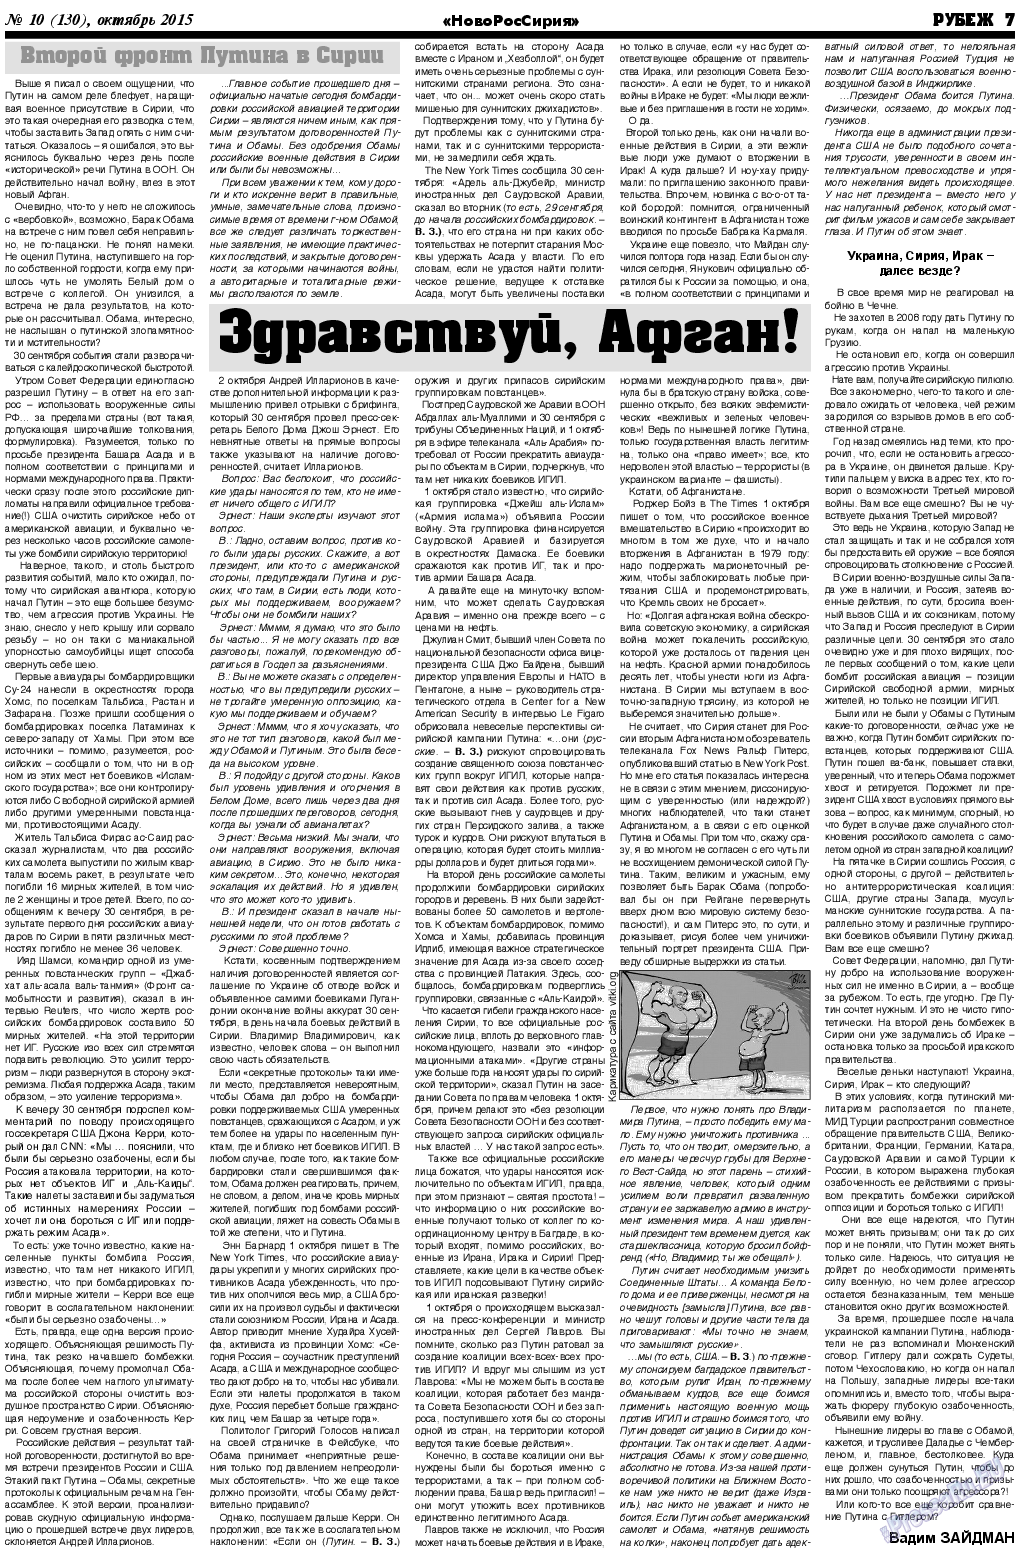 Рубеж, газета. 2015 №10 стр.7